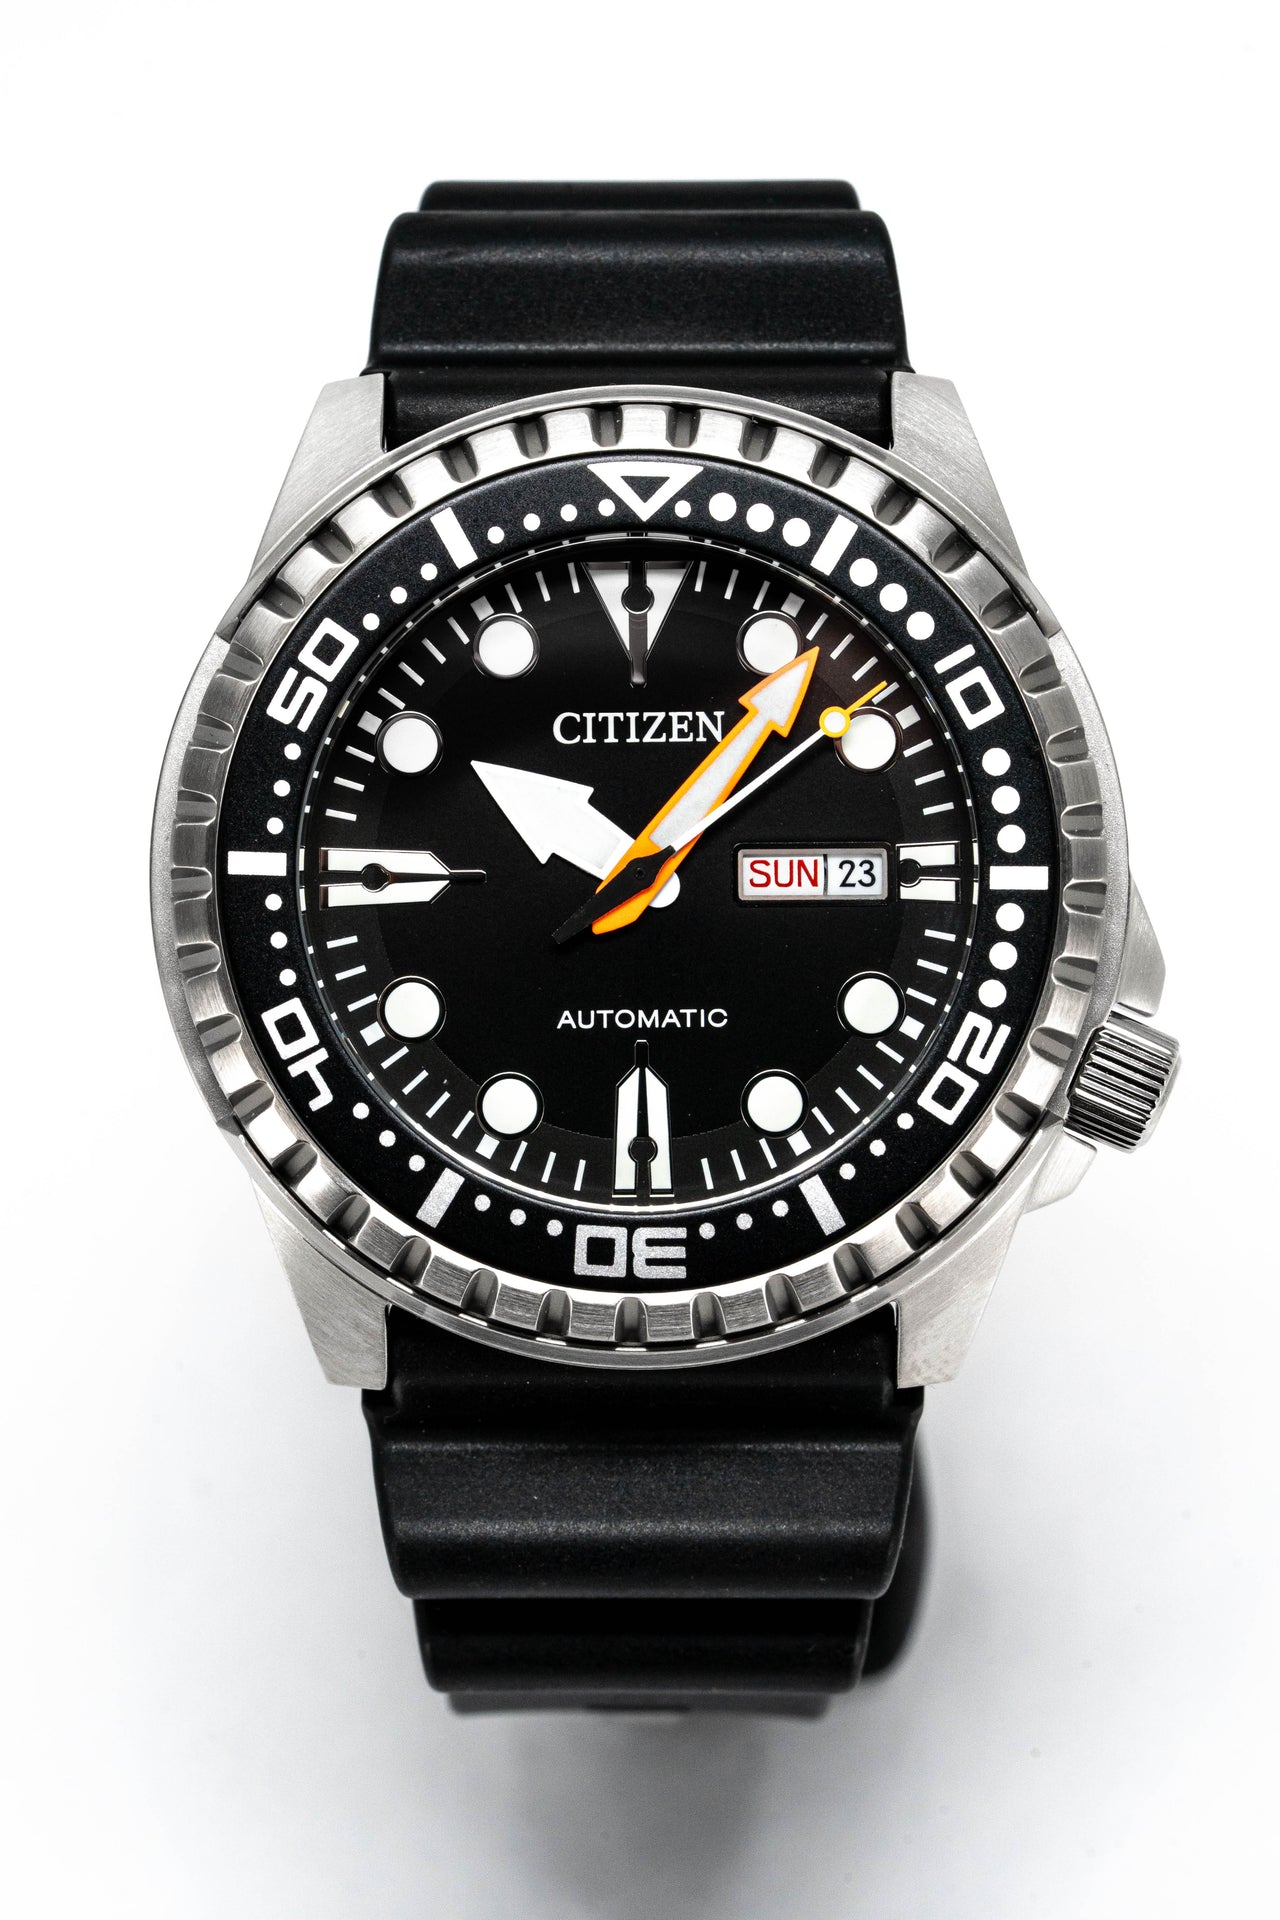 Citizen Men's Watch Mechanical Automatic Black NH8380-15E